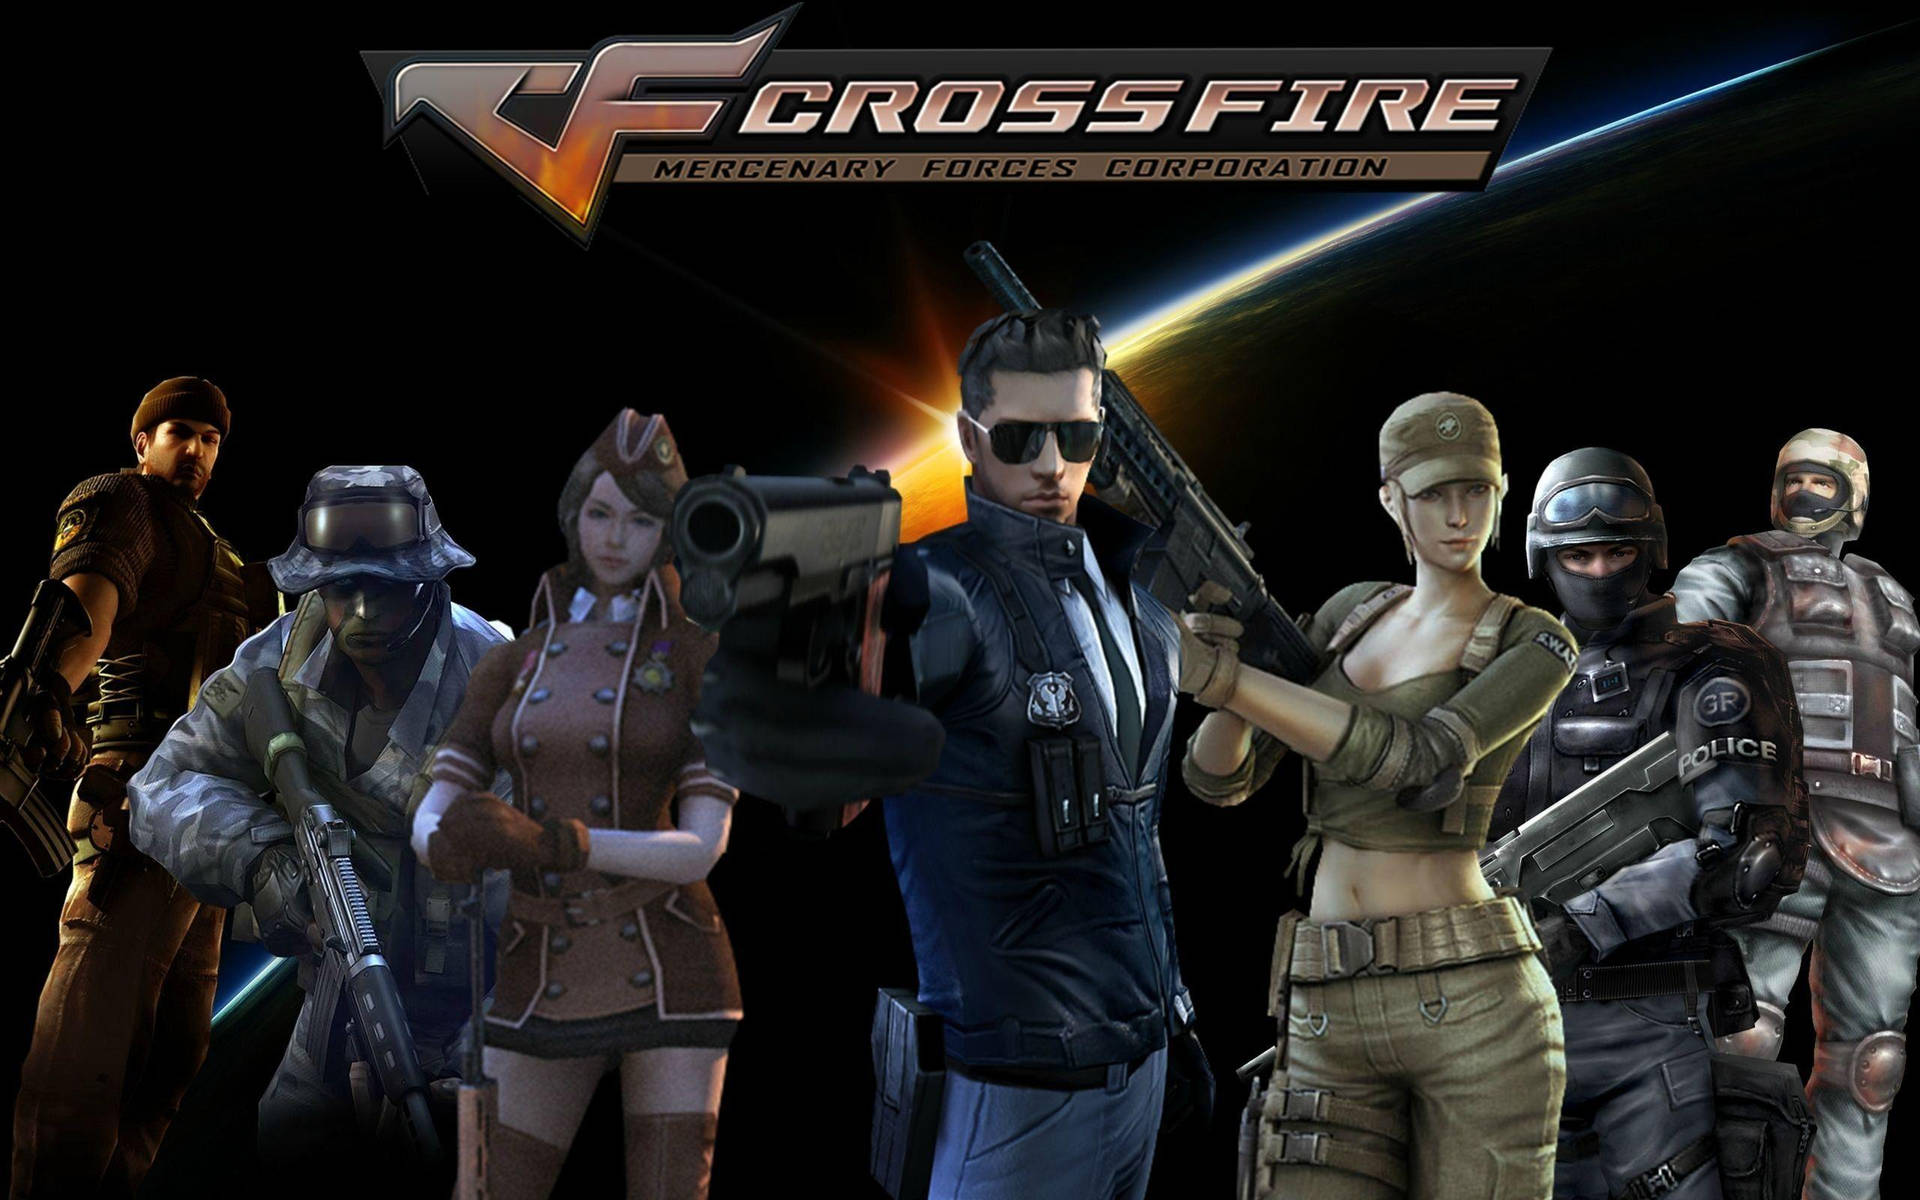 Crossfire Mercenary Forces Corporation